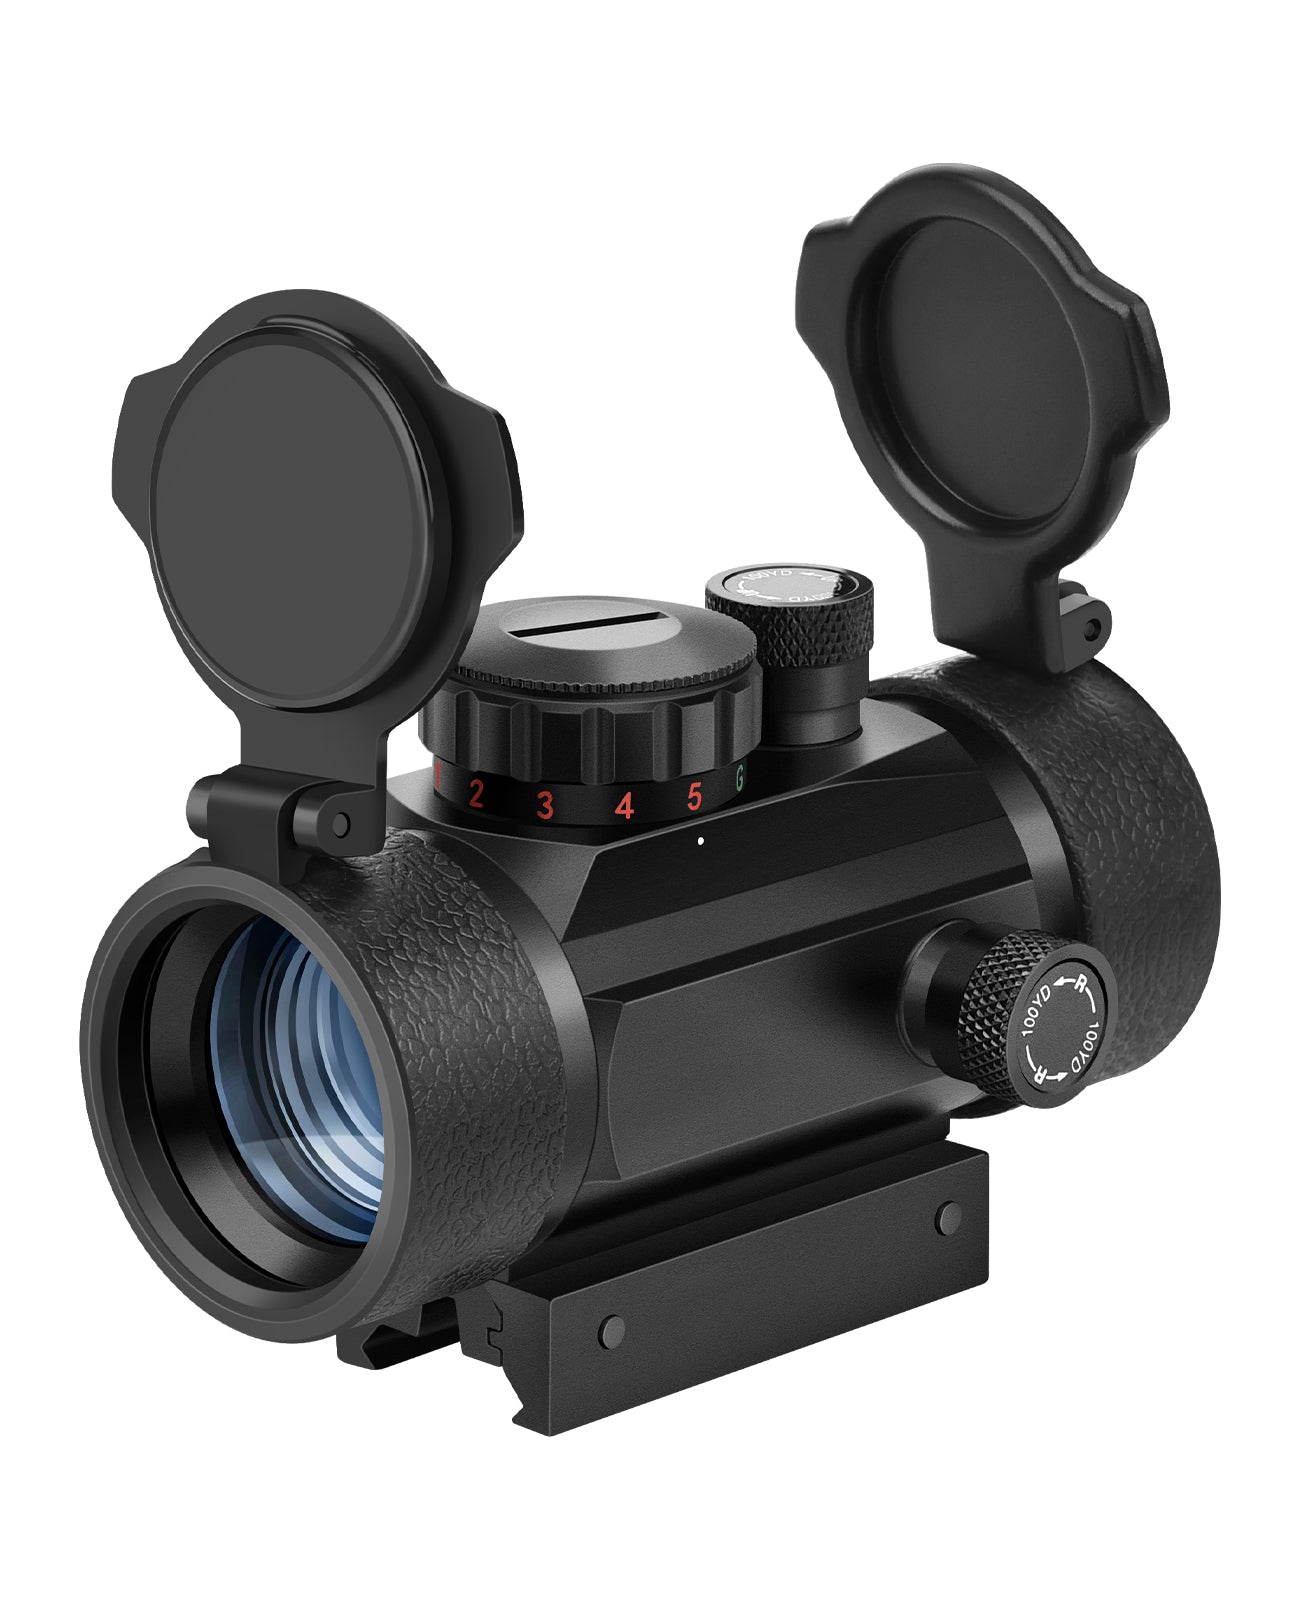 EZshoot Red Green Dot Sight Tactical Scope Reflex Sight with Lens Cap